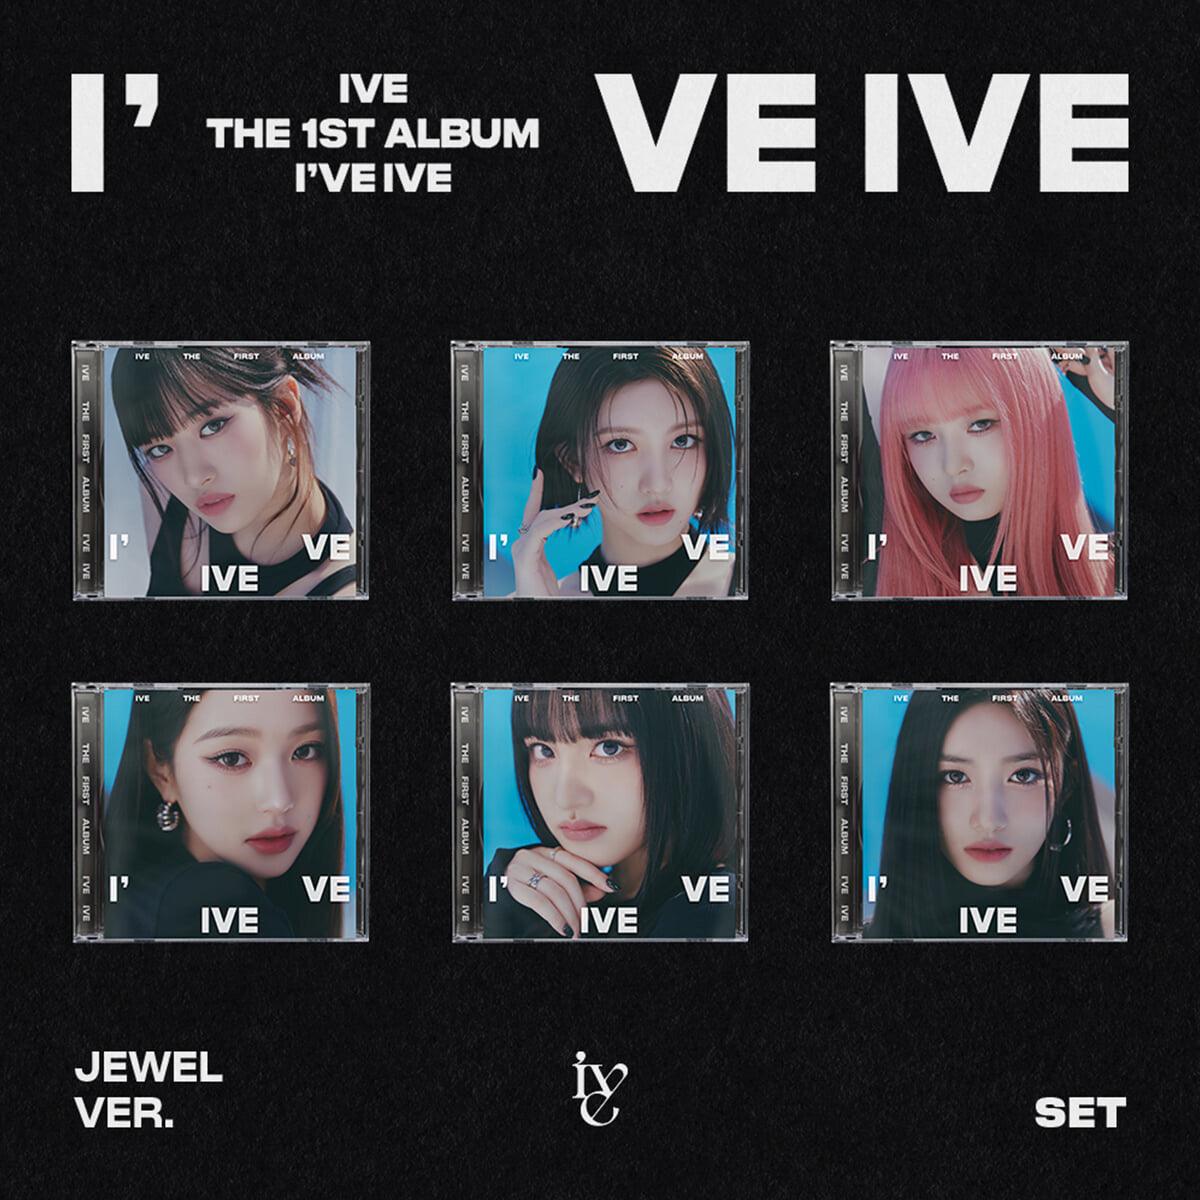 IVE Album Vol. 1 - I've IVE (Jewel Ver.) (Limited Edition) - KKANG